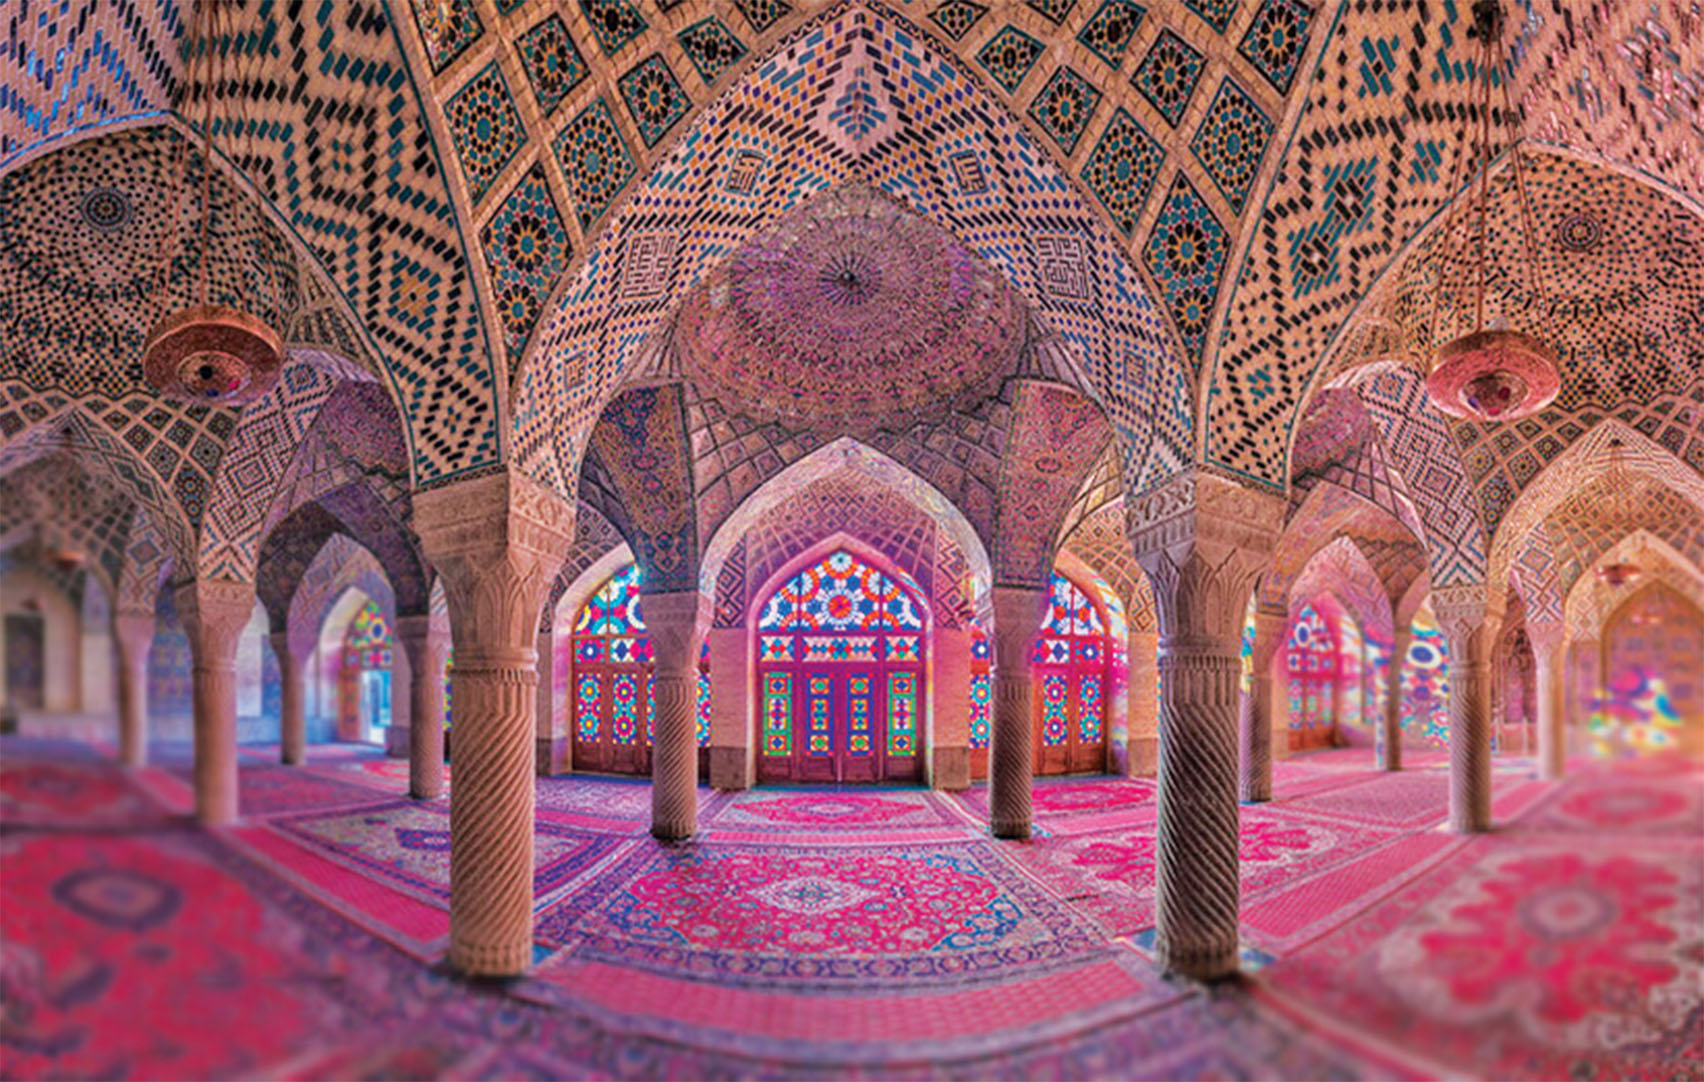 shiraz most beautiful cities in Iran